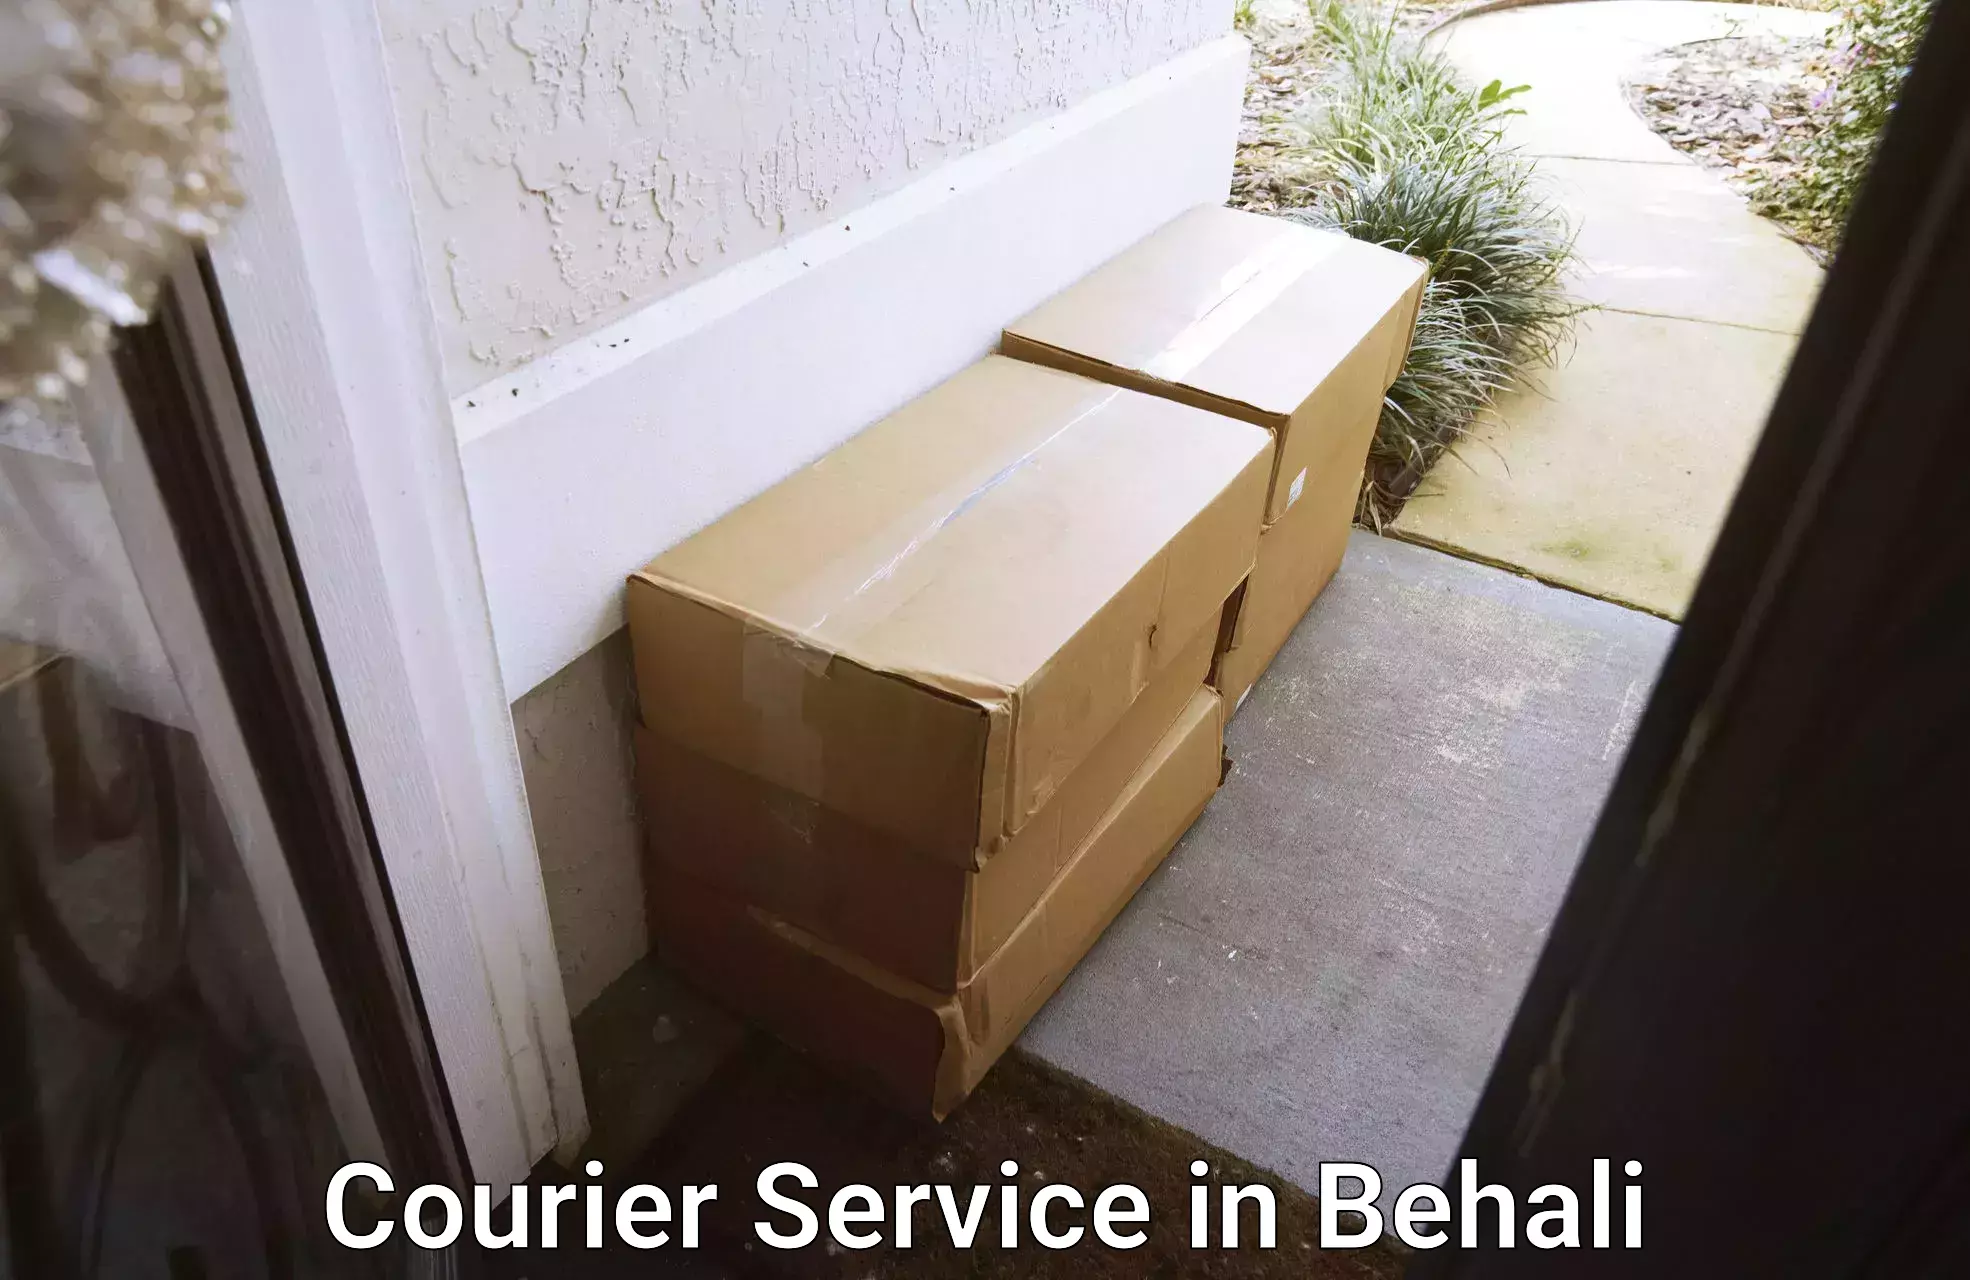 Weekend courier service in Behali